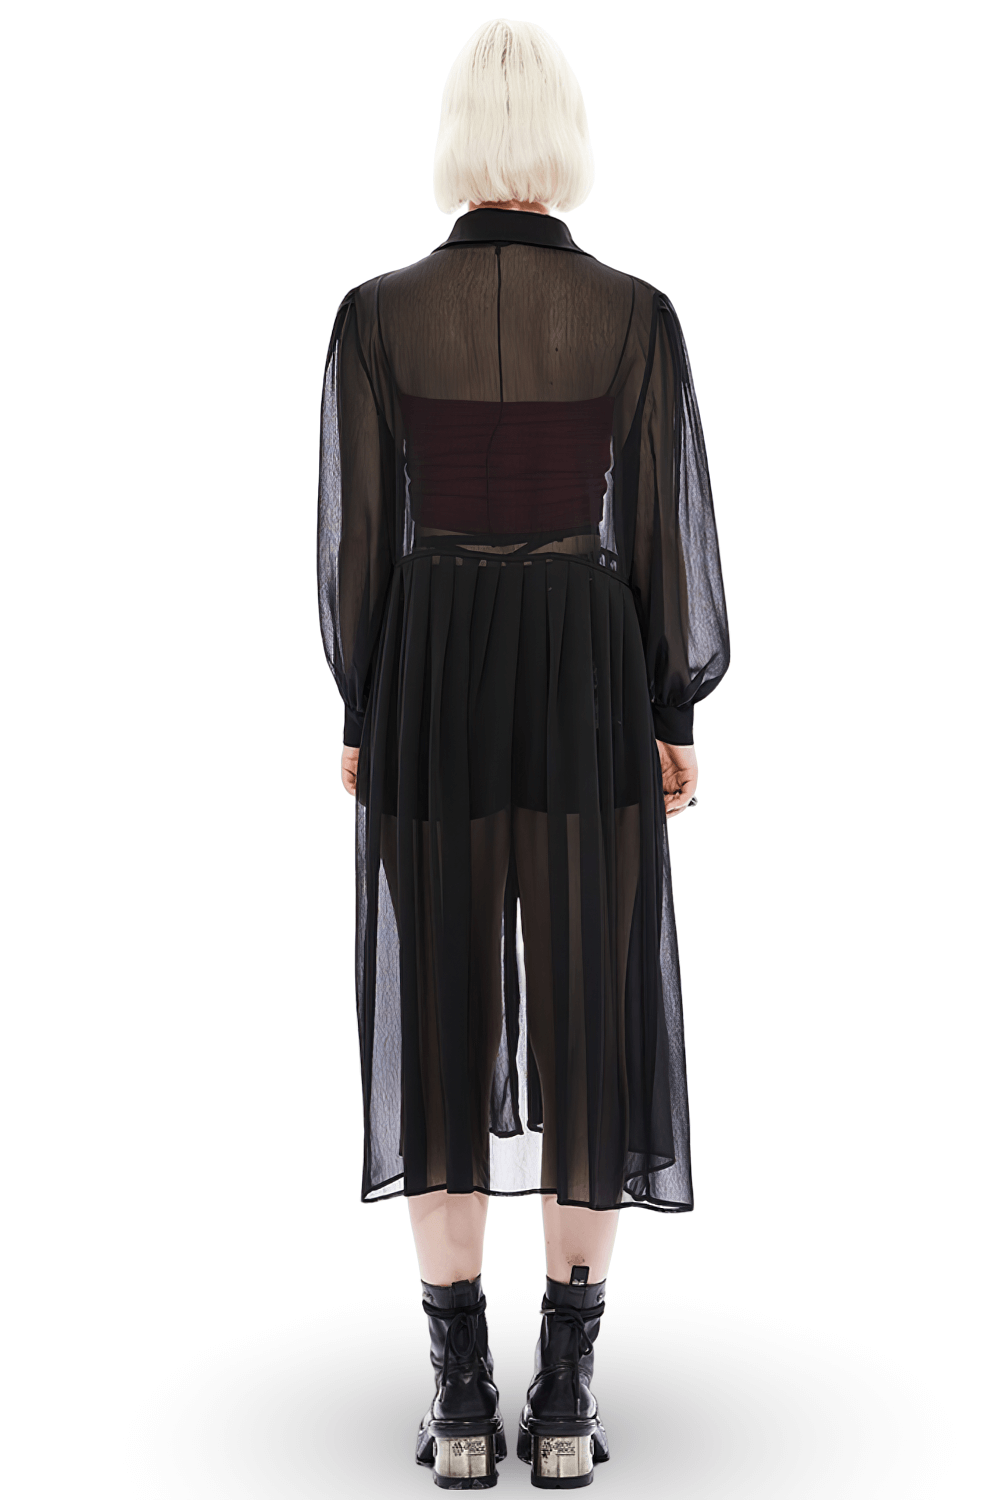 Elegant Gothic Sheer Black Long Sleeve Shirt Dress